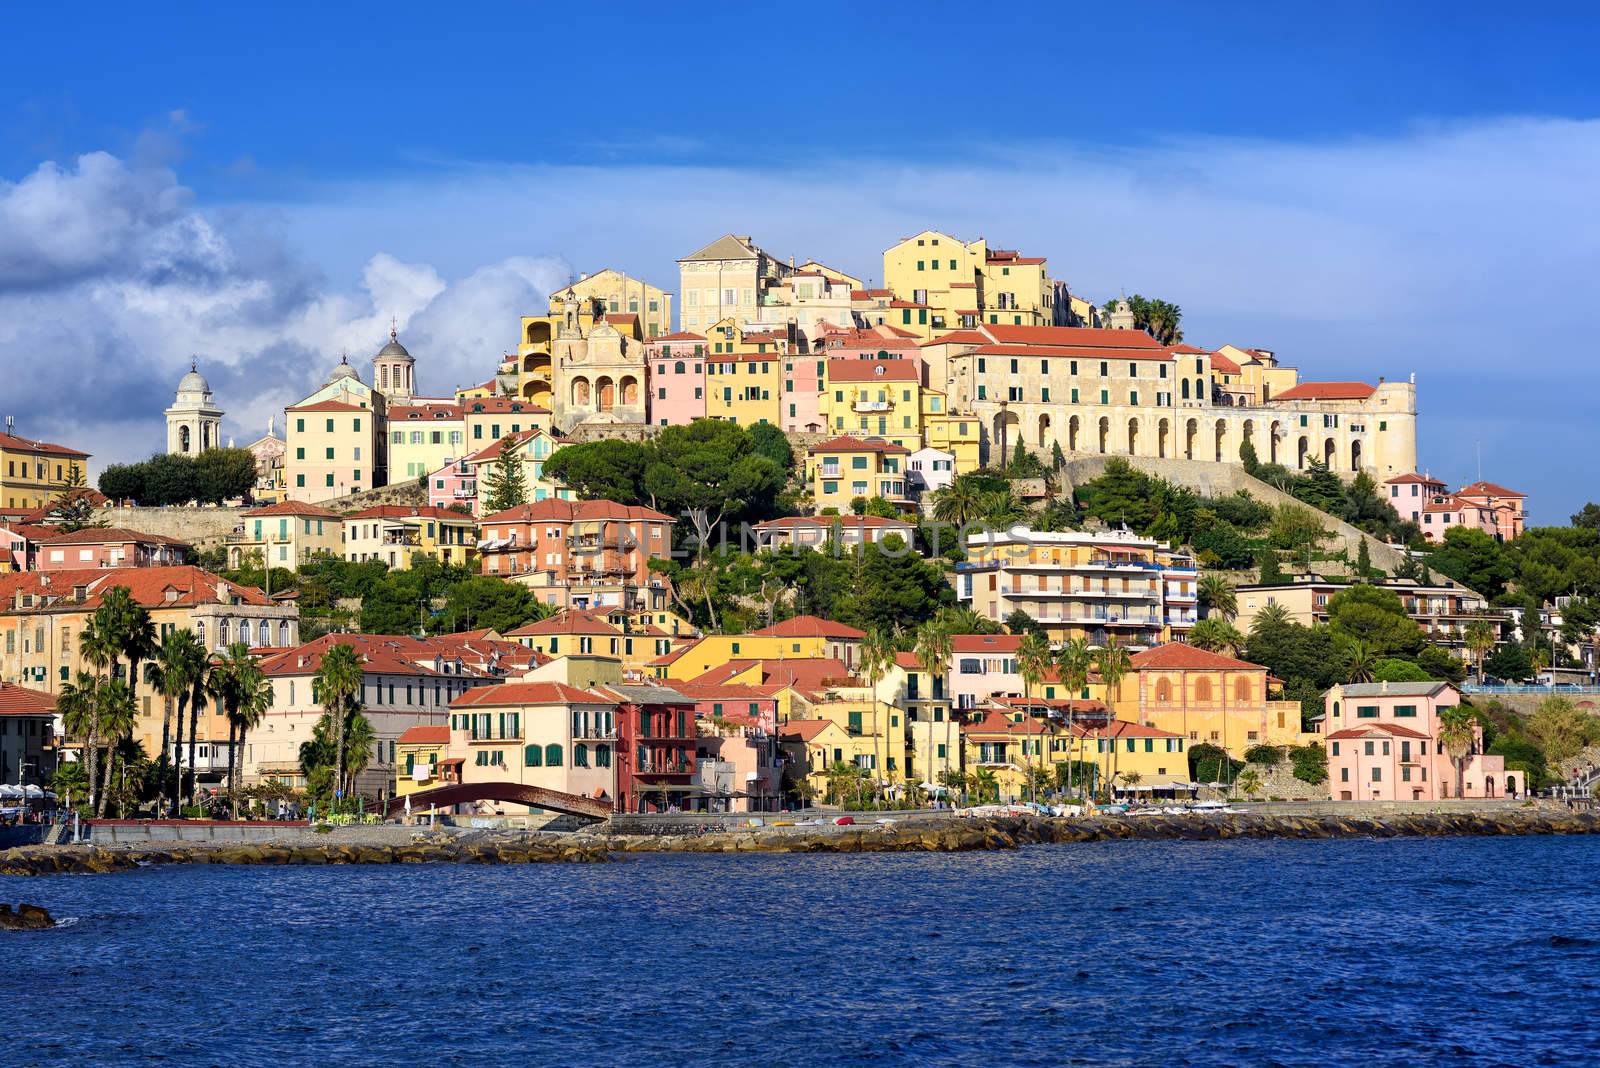 Porto Maurizio, the old town of Imperia, Italy by GlobePhotos